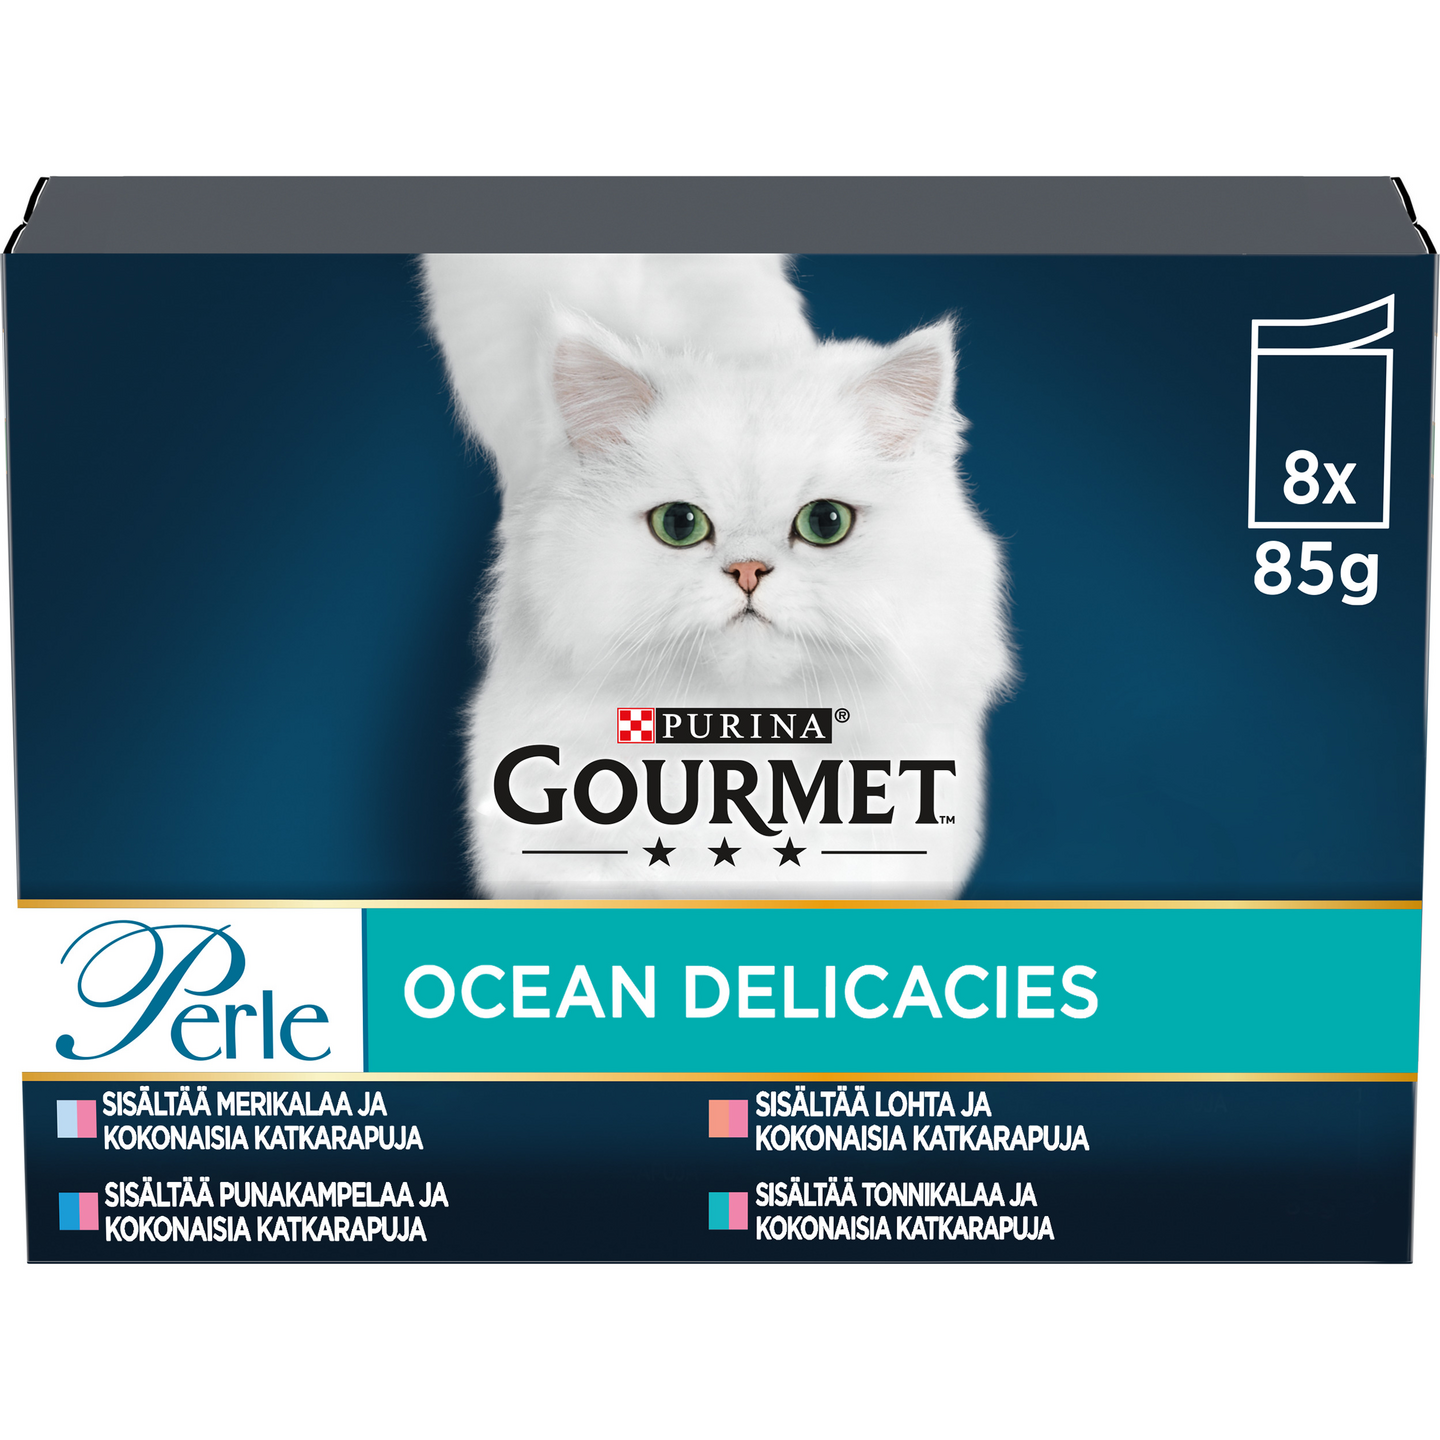 Gourmet Perle Sea Delicacies lajitelma 8x85g kissanruoka